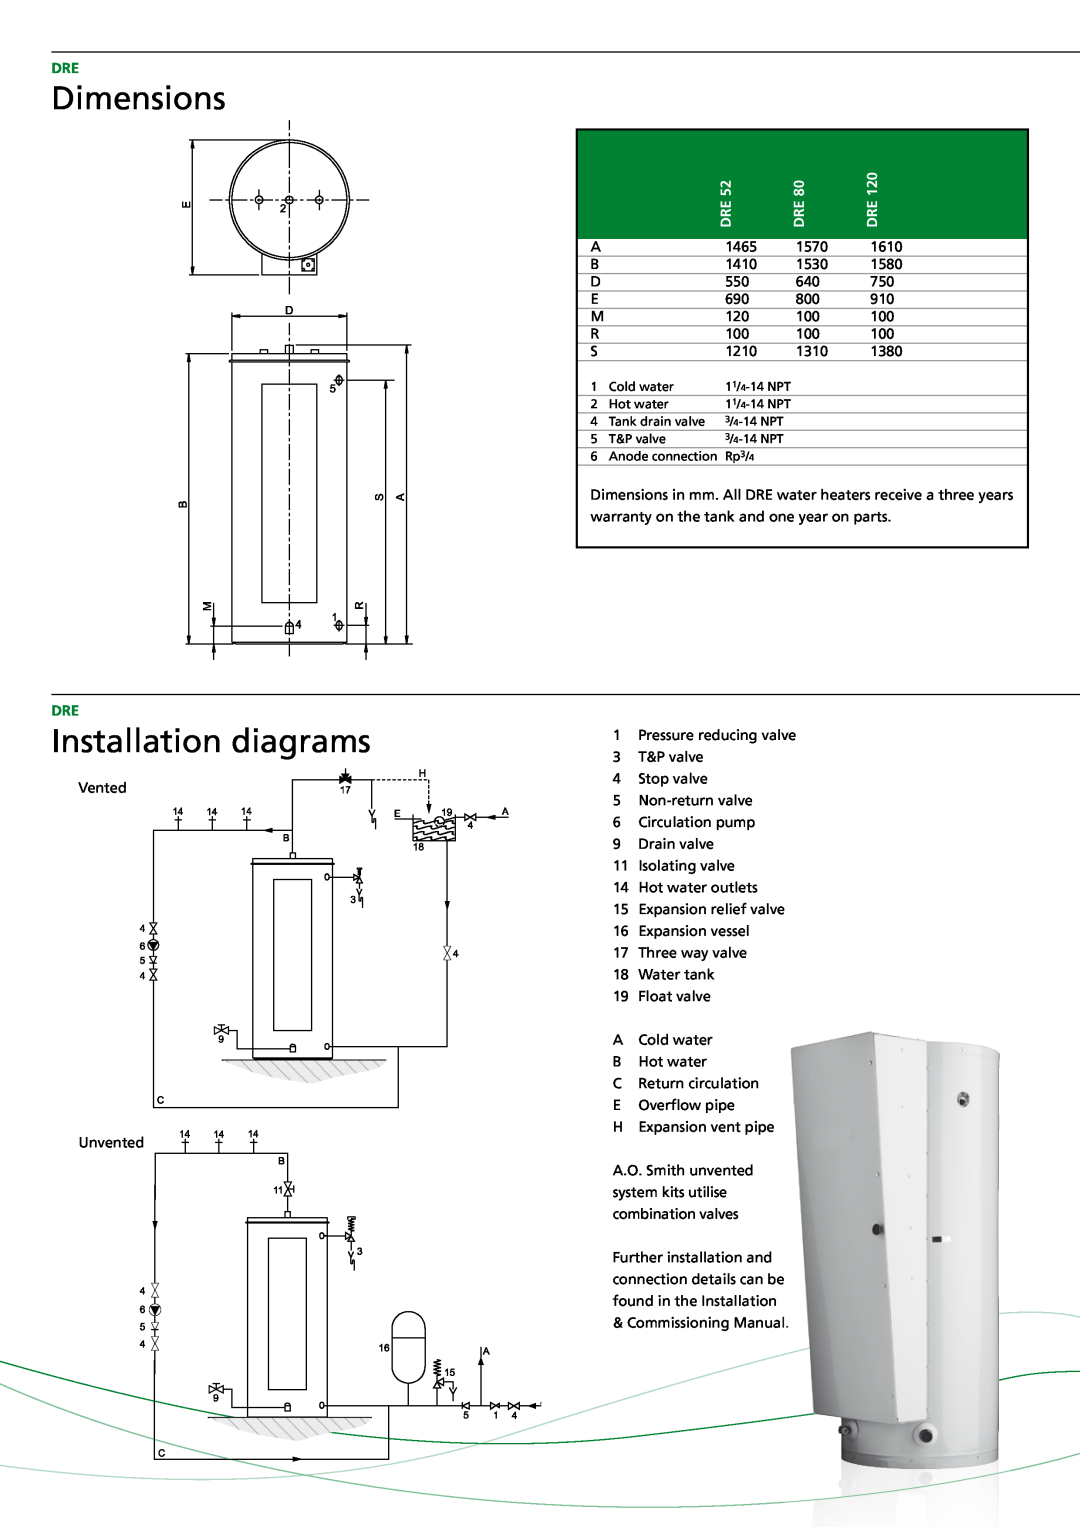 A.O. Smith DRE - 52/80/120 manual Dimensions, Installation diagrams 